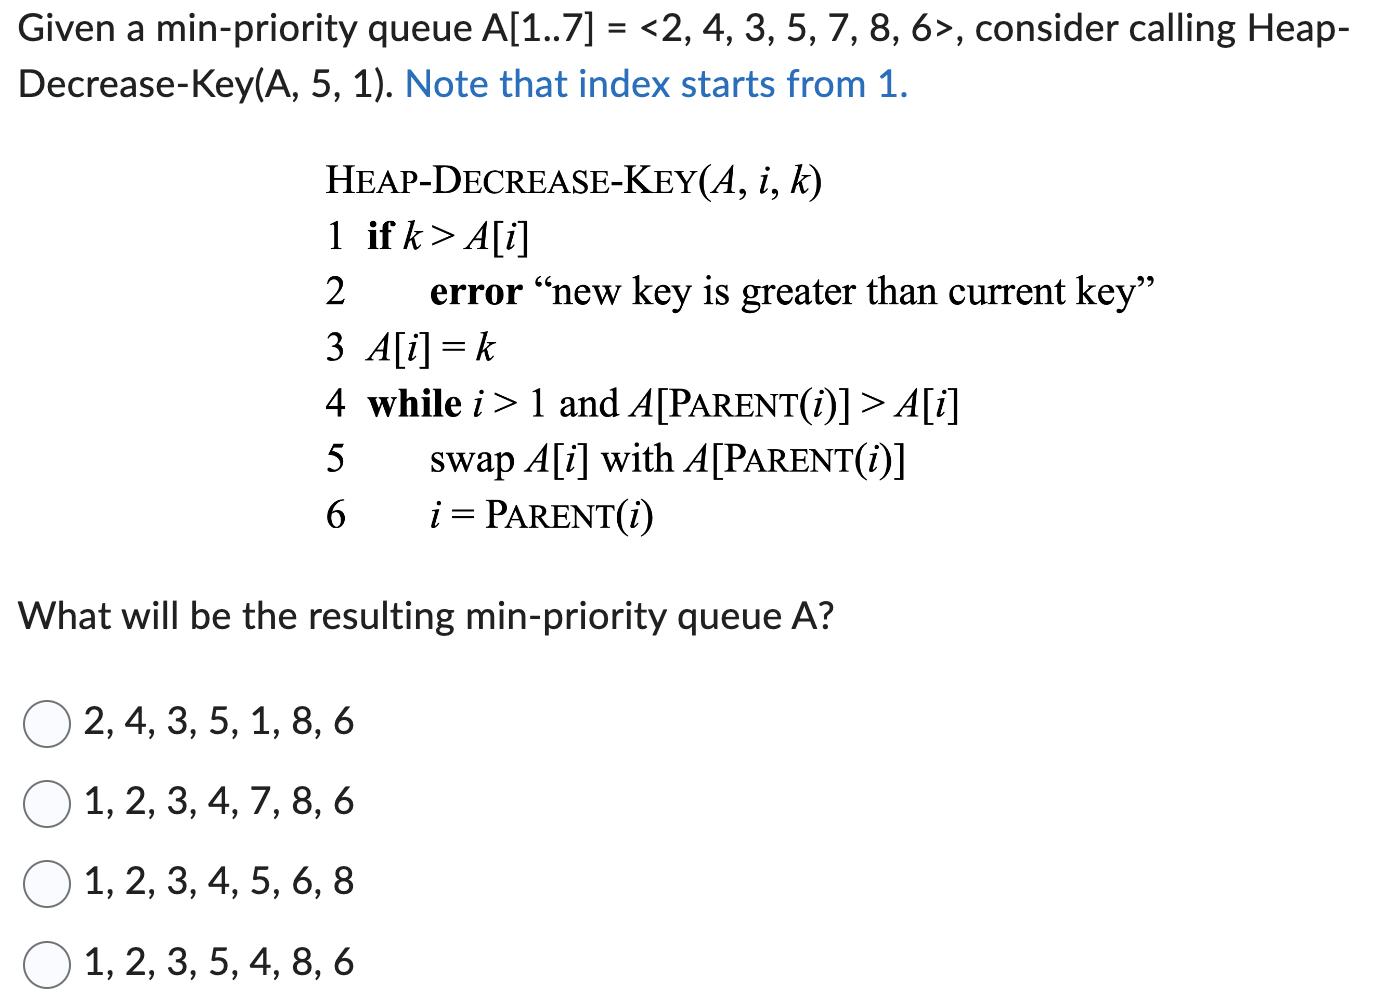 Given a min-priority queue A[1..7] = <2, 4, 3, 5, 7, 8, 6>, consider calling Heap- Decrease-Key(A, 5, 1).